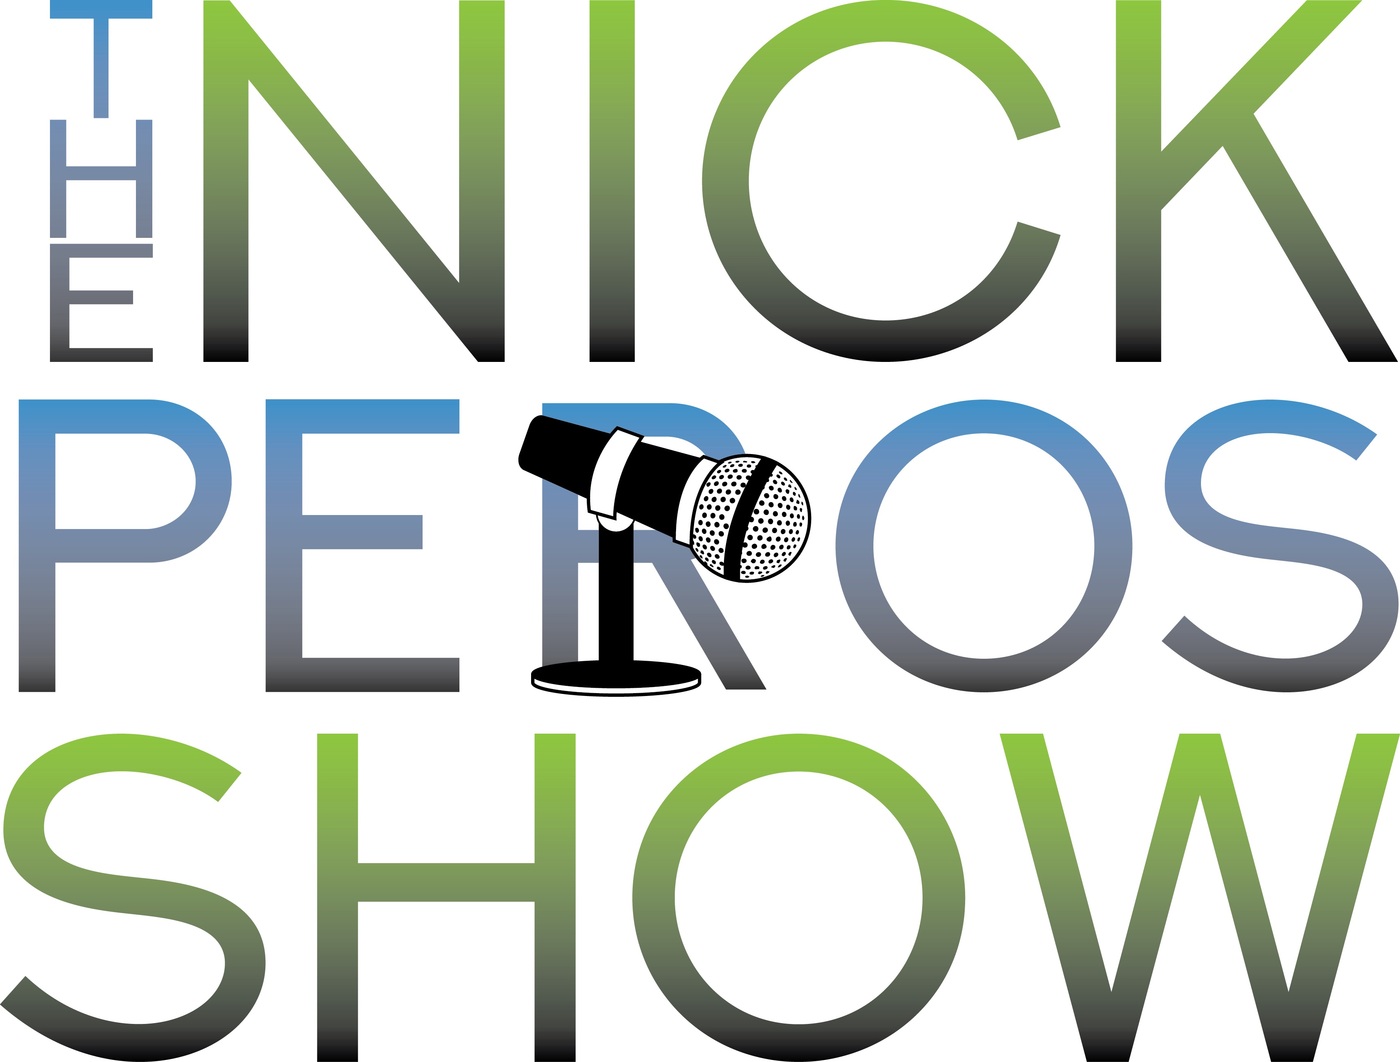 The Nick Peros Show - Episode 17 - WrestleMania!